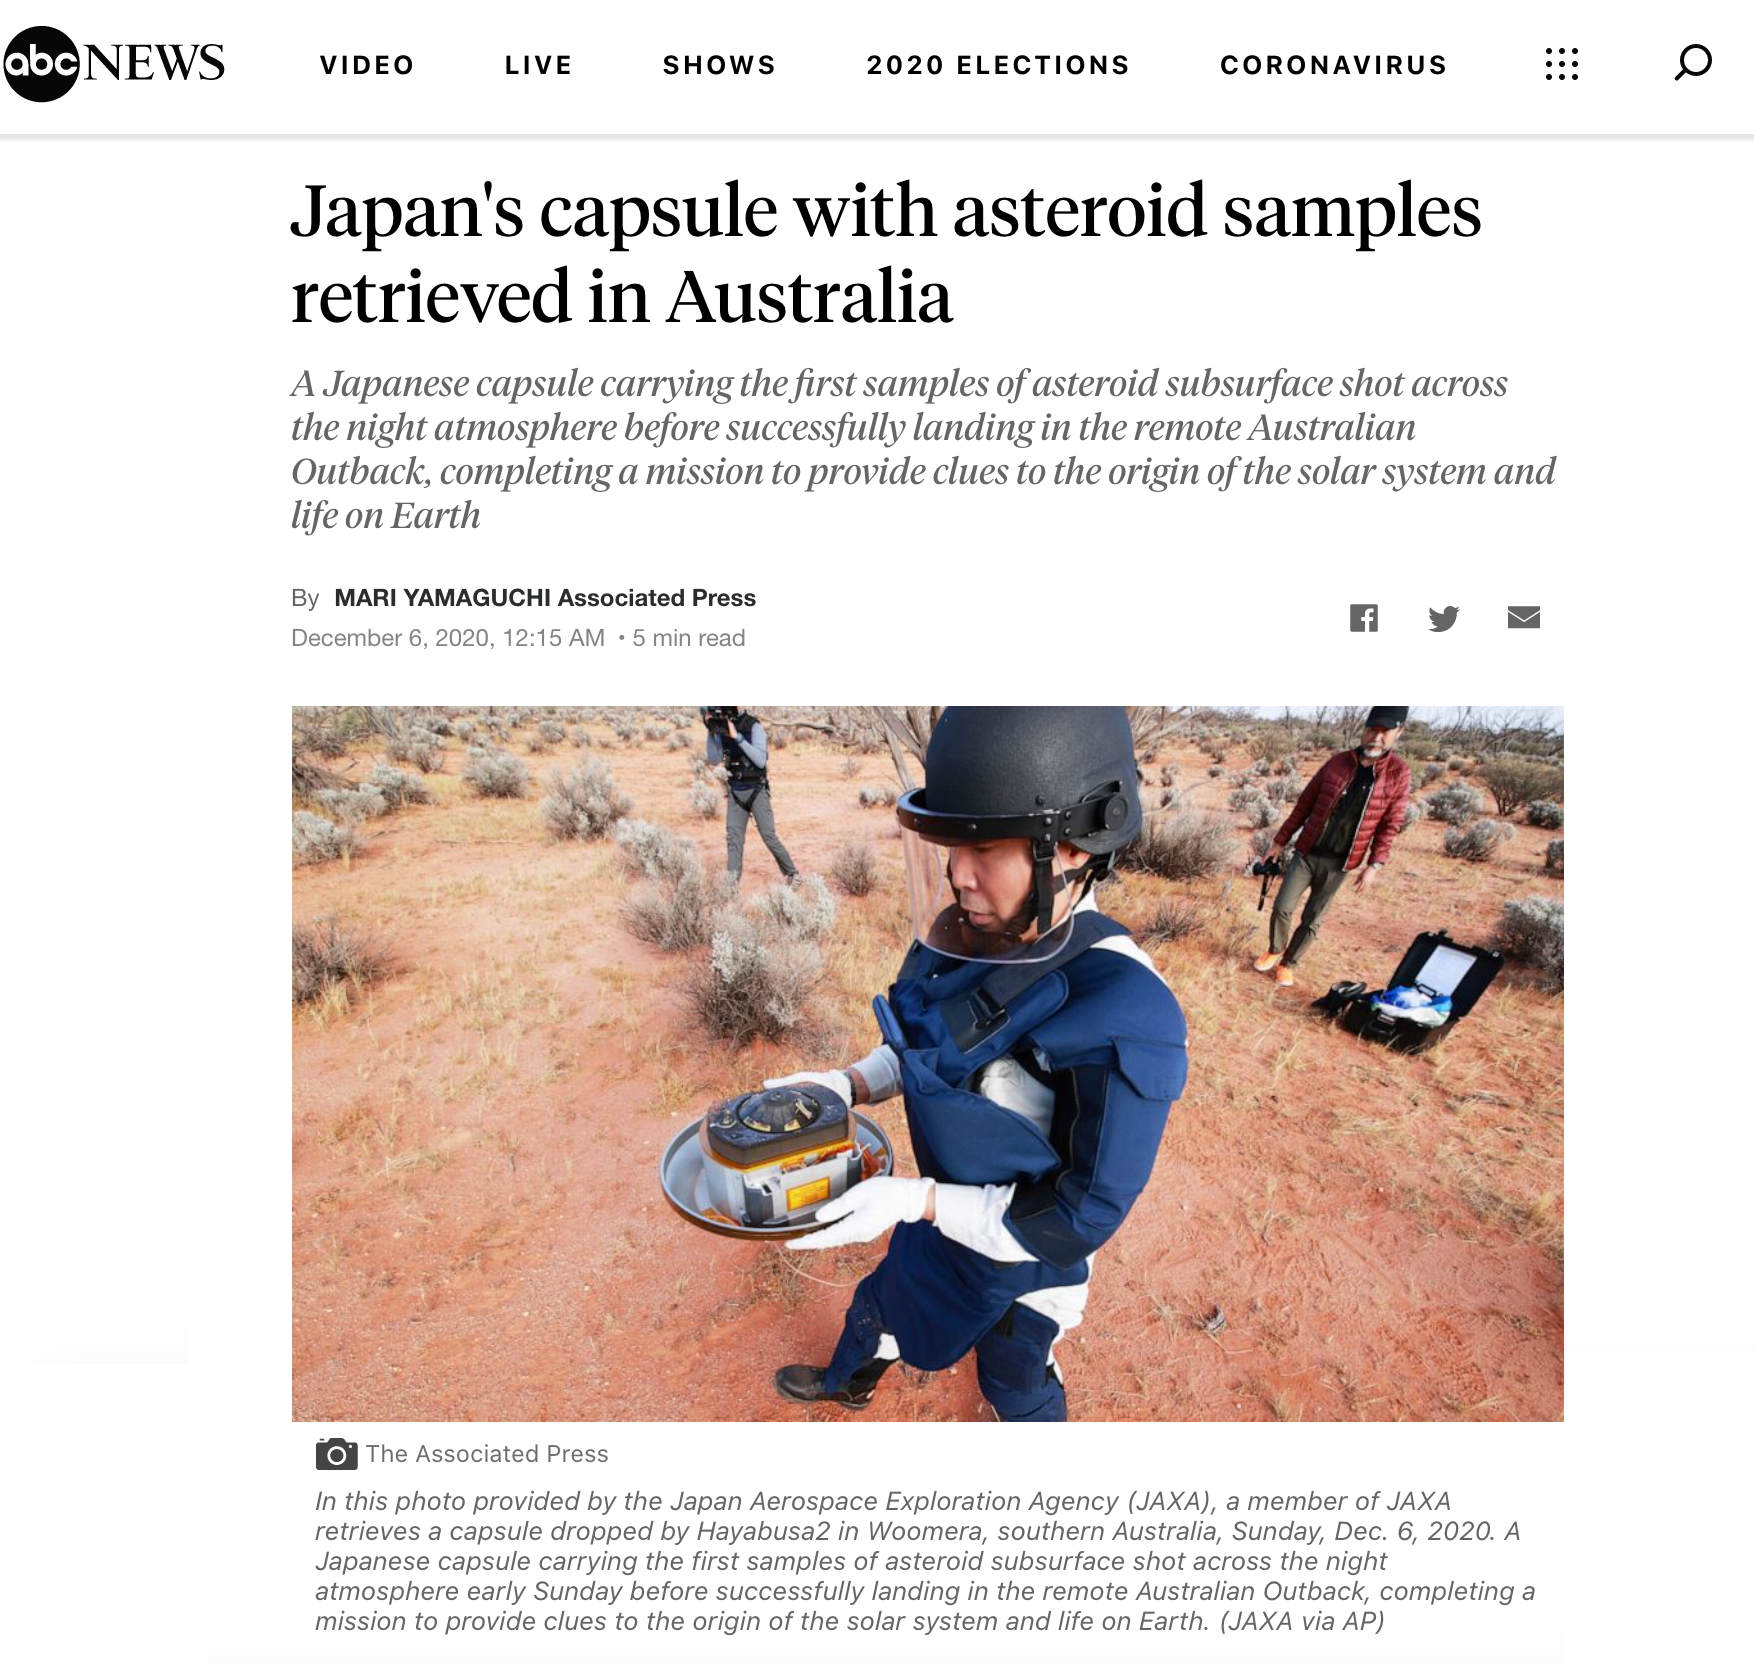 Hayabusa asyeroid sample returned to earth.jpg